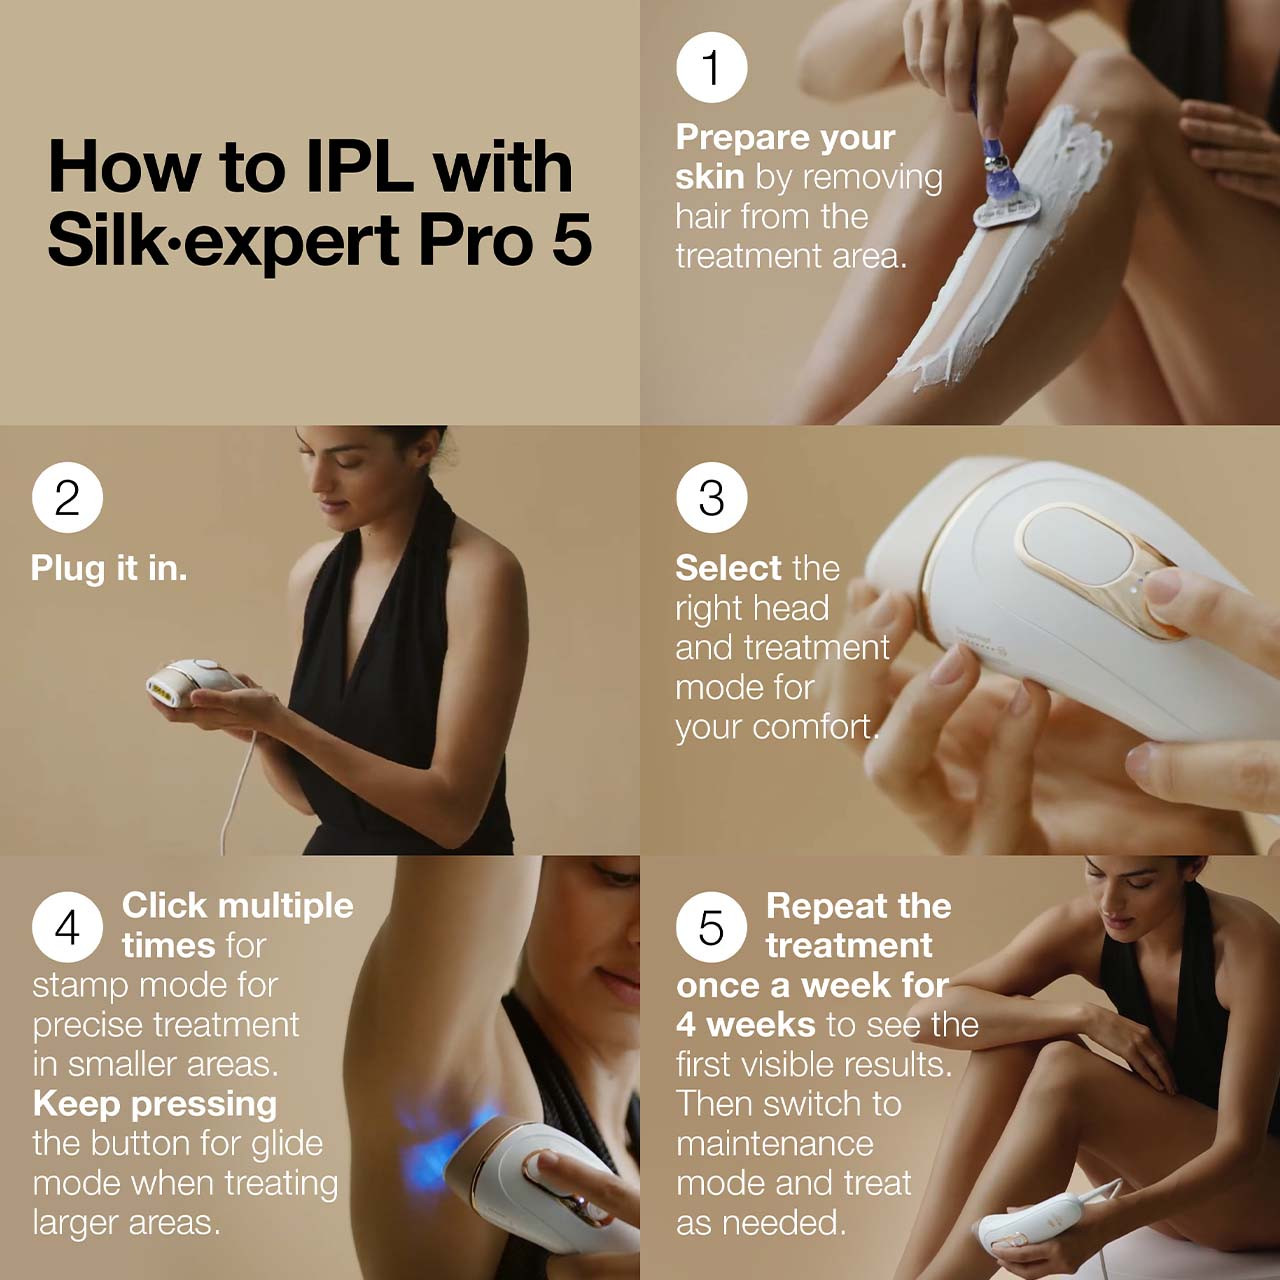 Braun Silk·expert Pro 5 IPL Laser Hair Removal, PL5347 | Braun